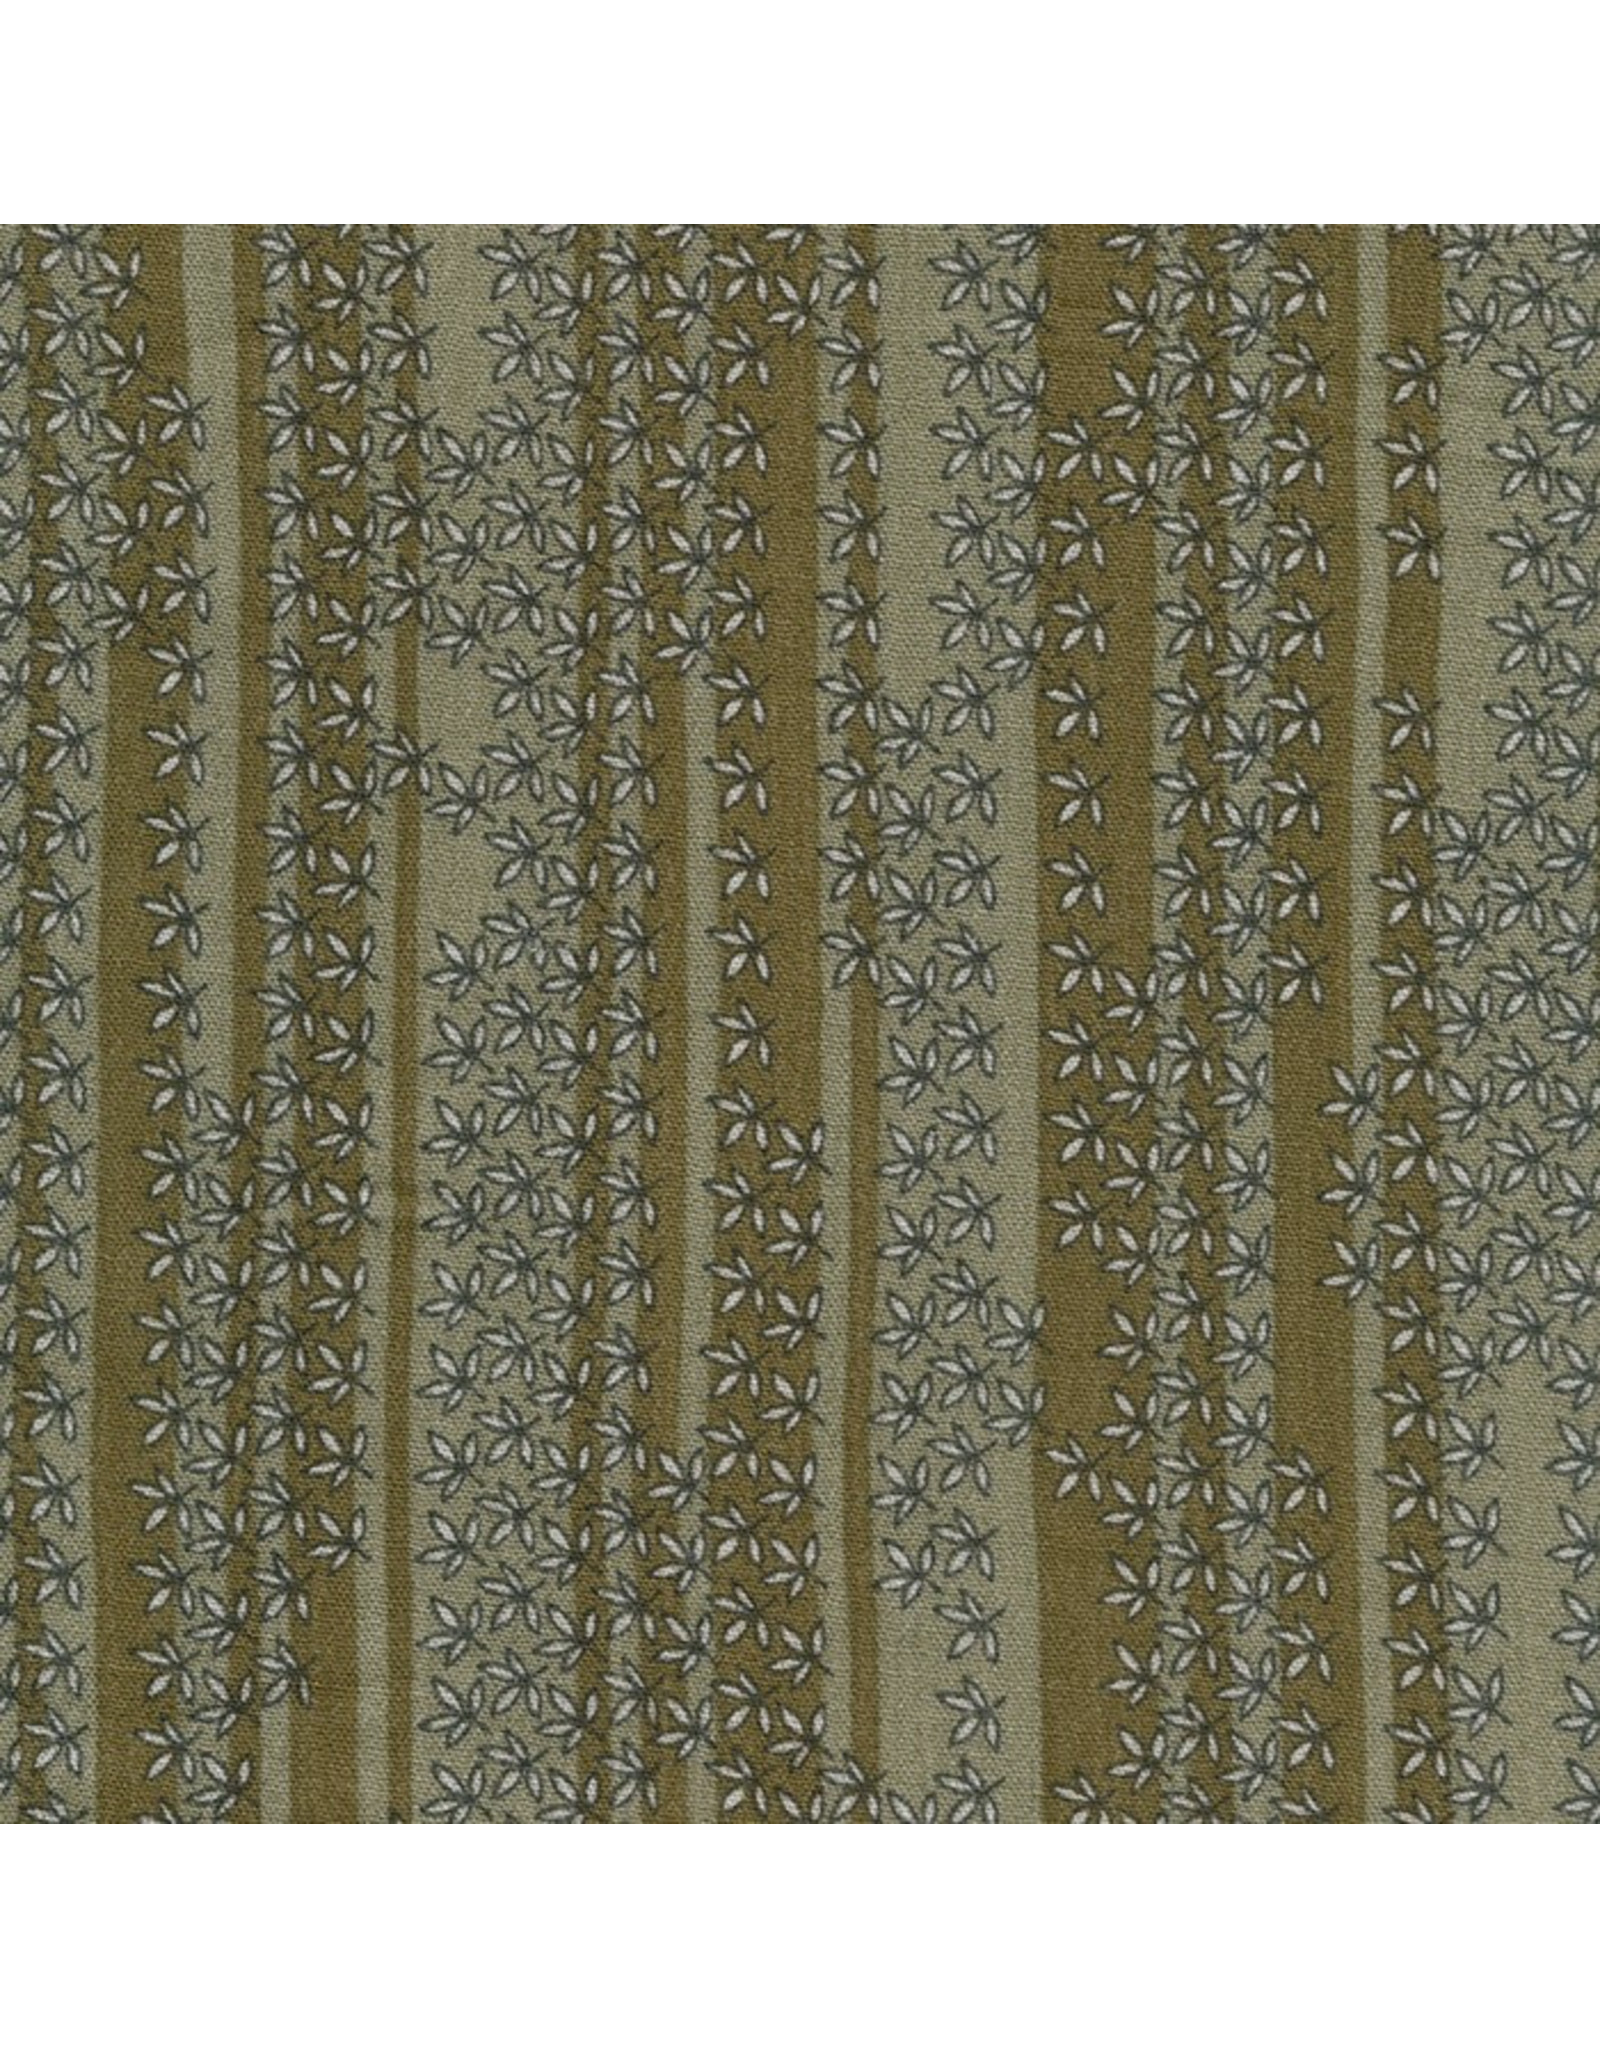 Robert Kaufman Rayon Crinkle, Sunset Studio Collection in Olive, Fabric Half-Yards